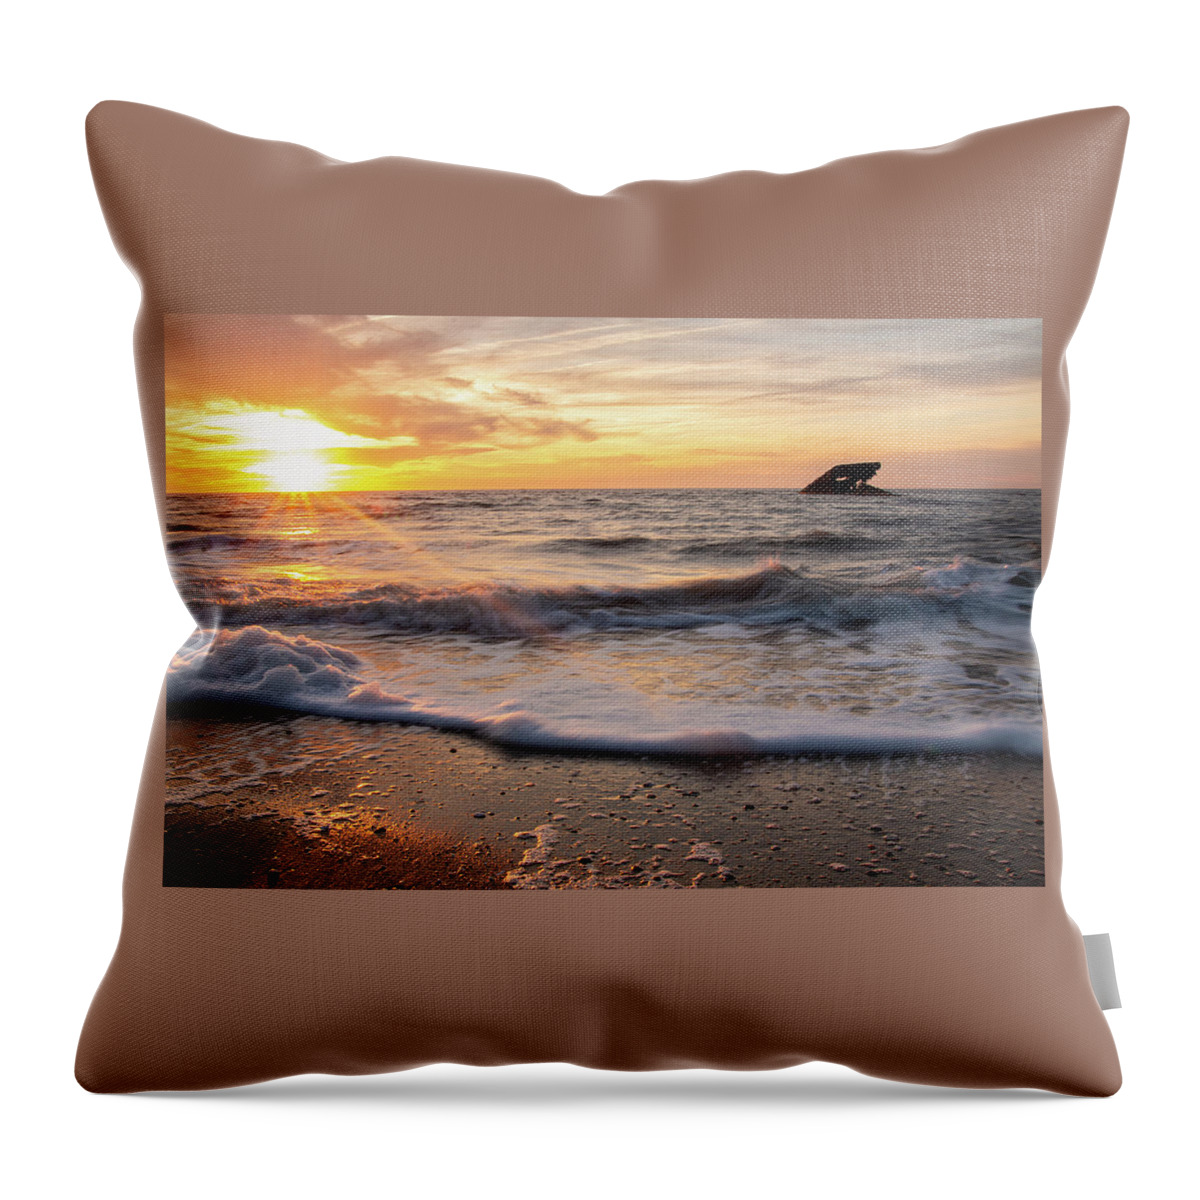 New Jersey Throw Pillow featuring the photograph Atlantus Shipwreck at Sunset Beach by Kristia Adams